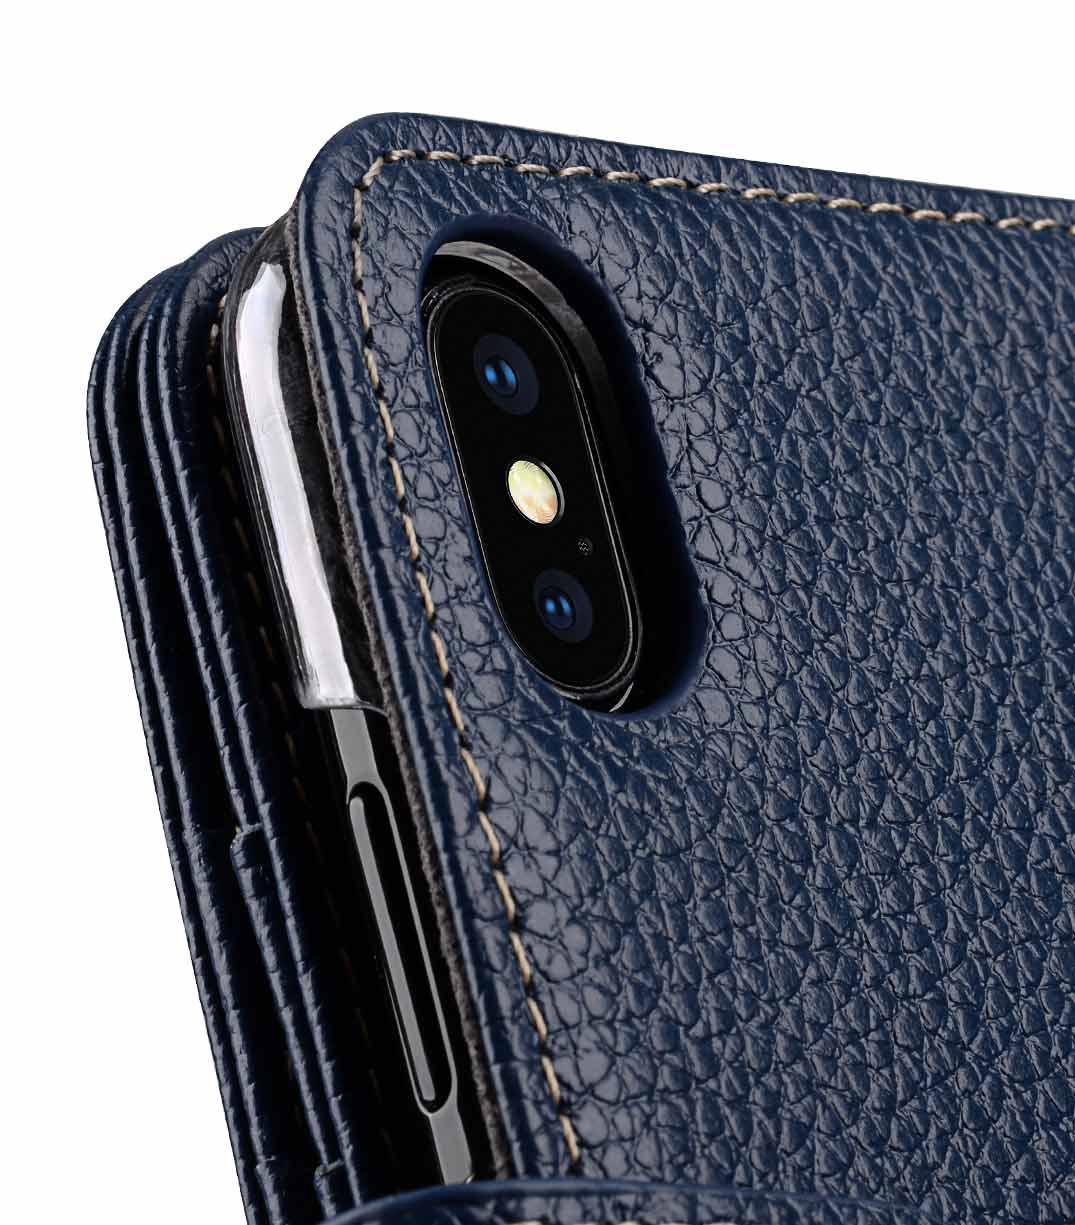 Melkco Premium Leather Case for Apple iPhone X - Wallet Plus Book Type (Dark Blue LC)